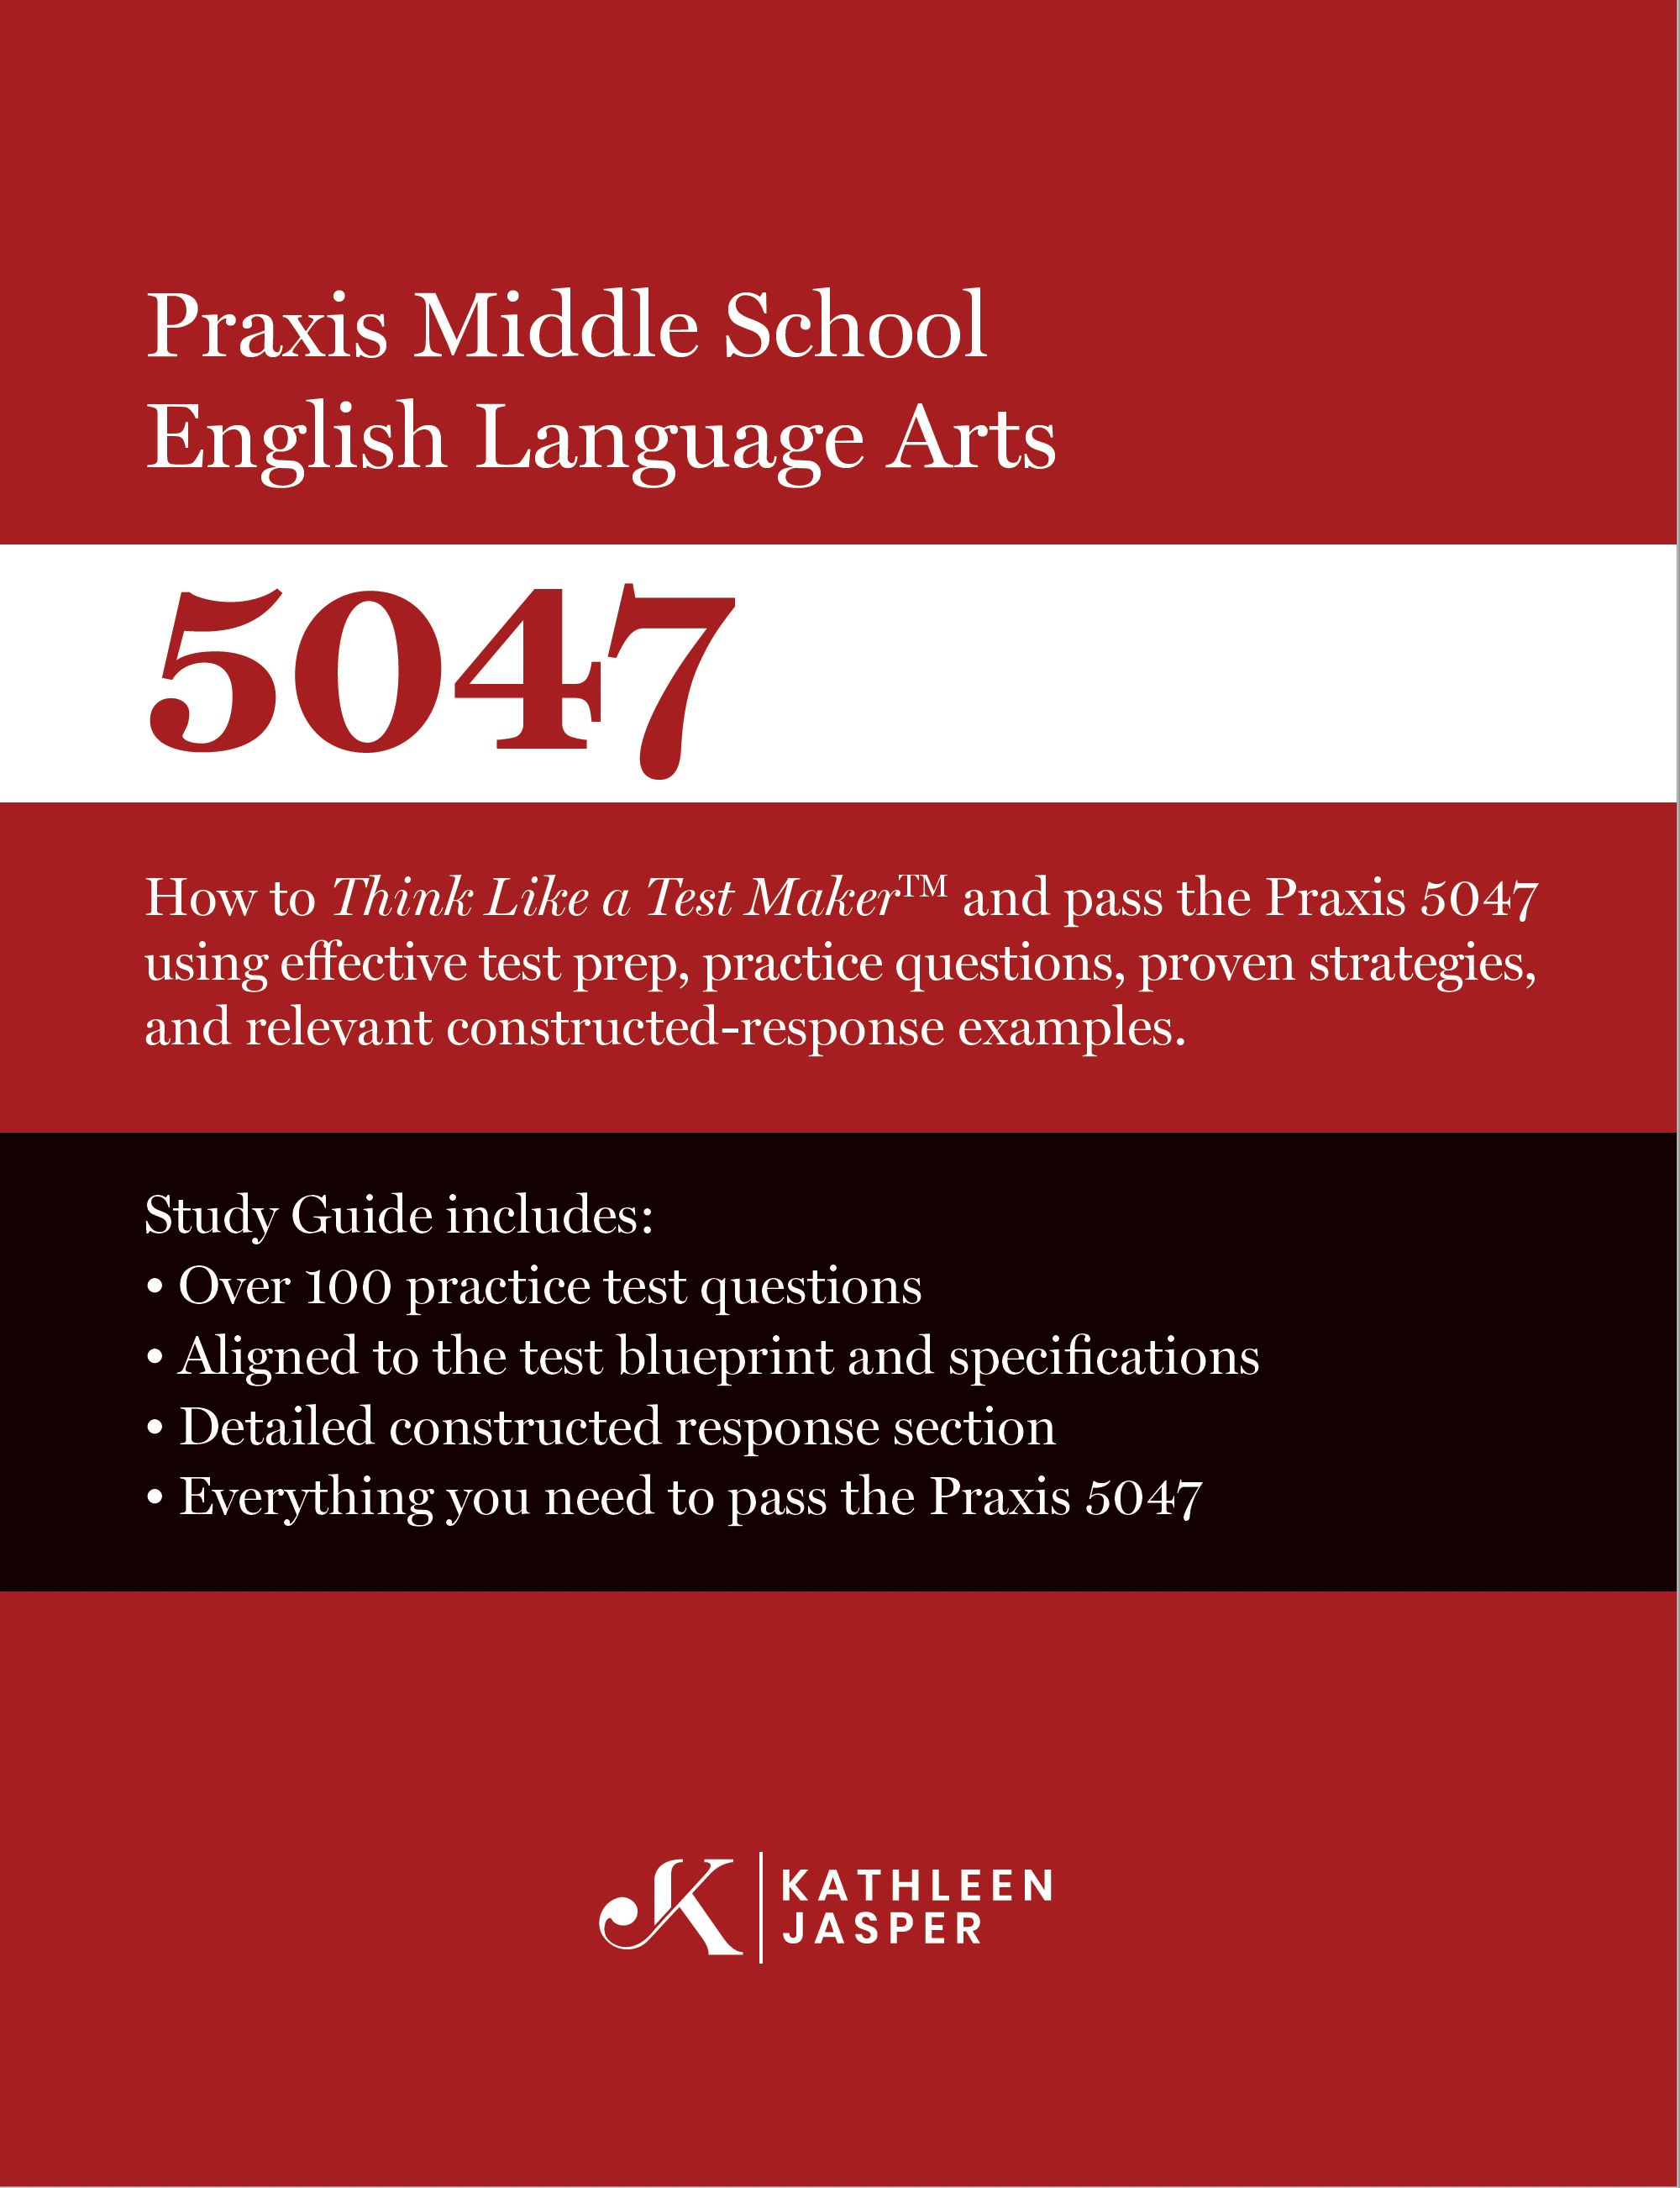 Praxis Middle School English Language Arts 5047 - Digital Study Guide